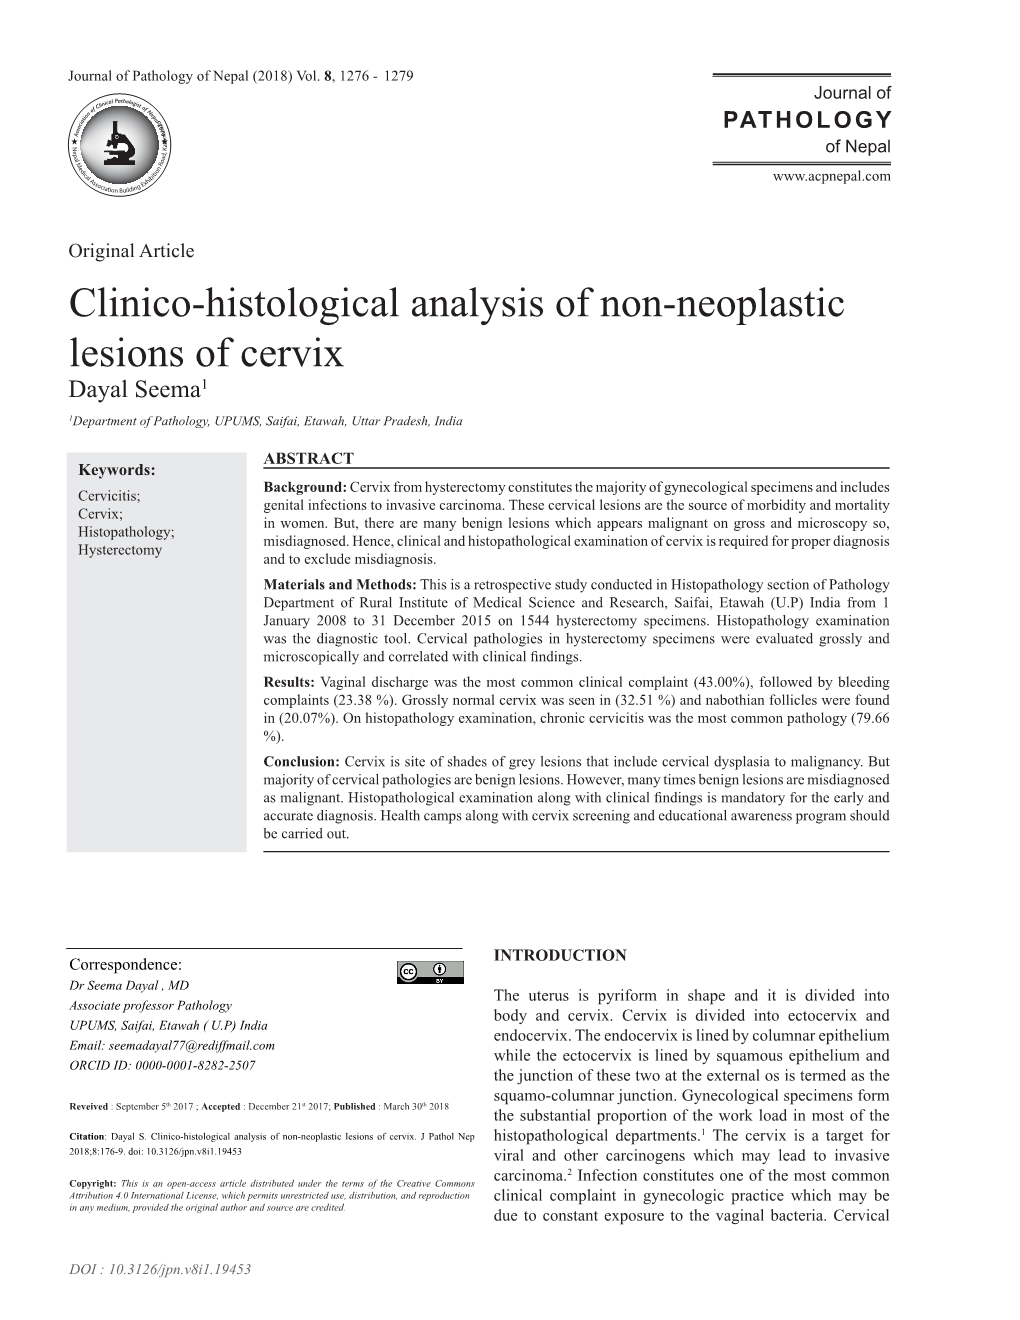 Clinico-Histological Analysis of Non-Neoplastic Lesions of Cervix Dayal Seema1 1Department of Pathology, UPUMS, Saifai, Etawah, Uttar Pradesh, India